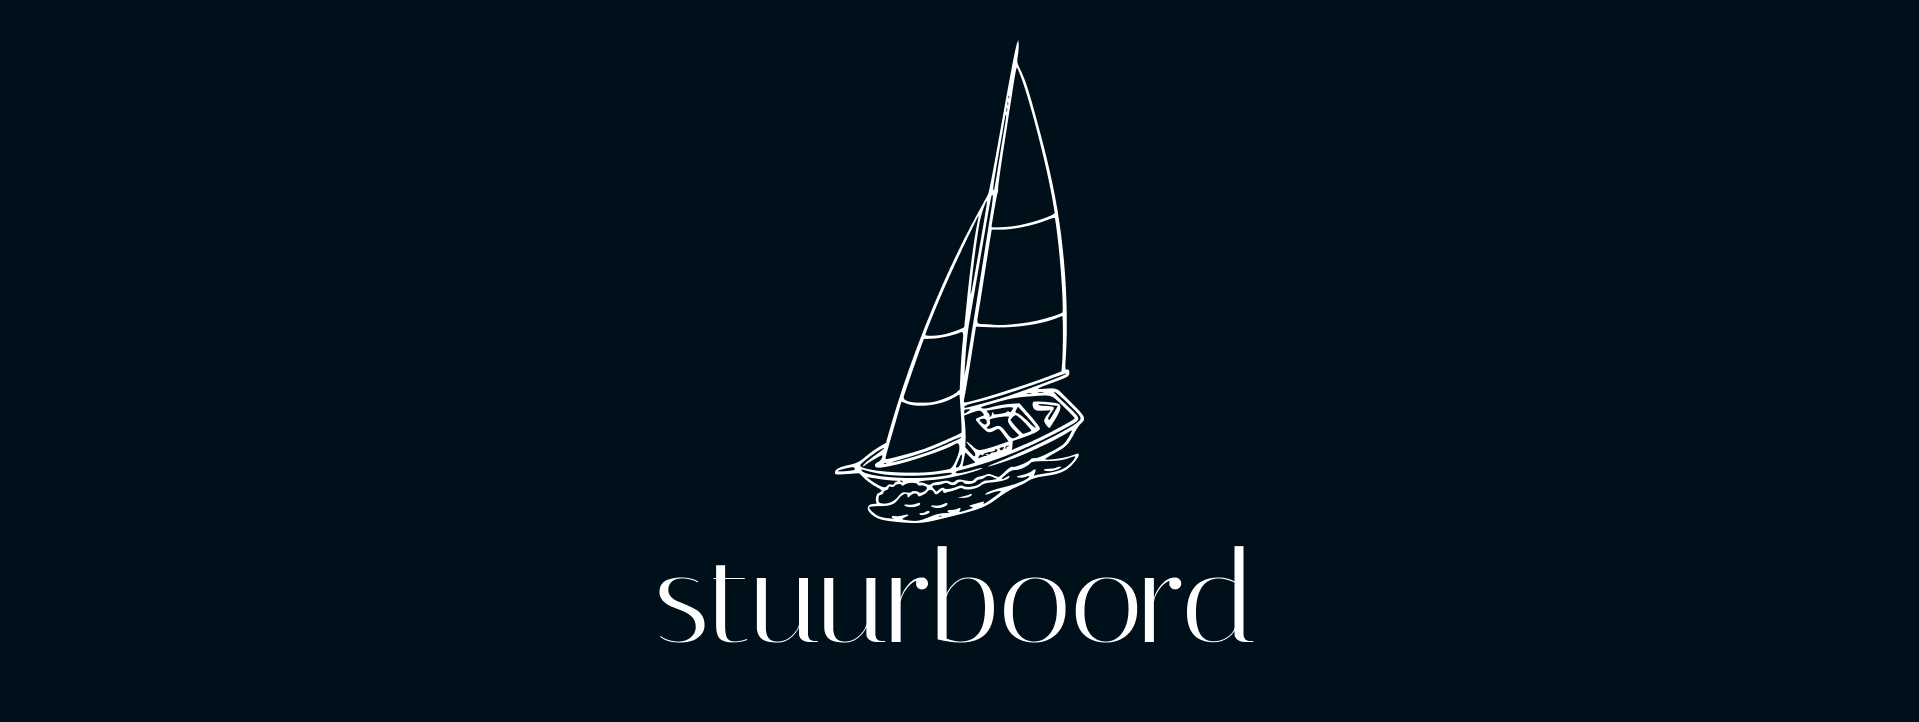 stuurboord - multiplayer sailing game